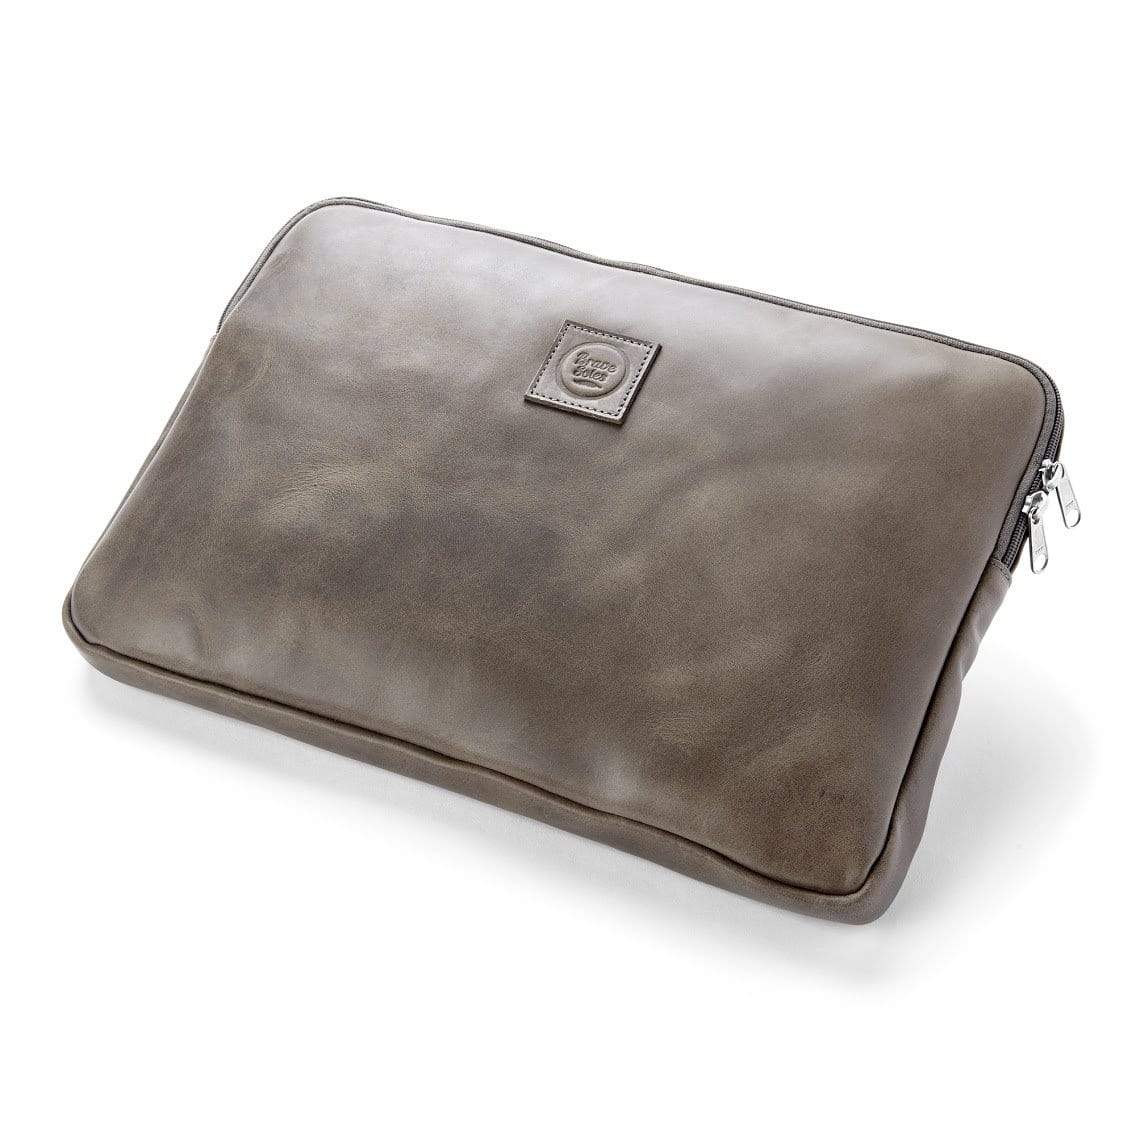 The Simpatico Leather Laptop Case